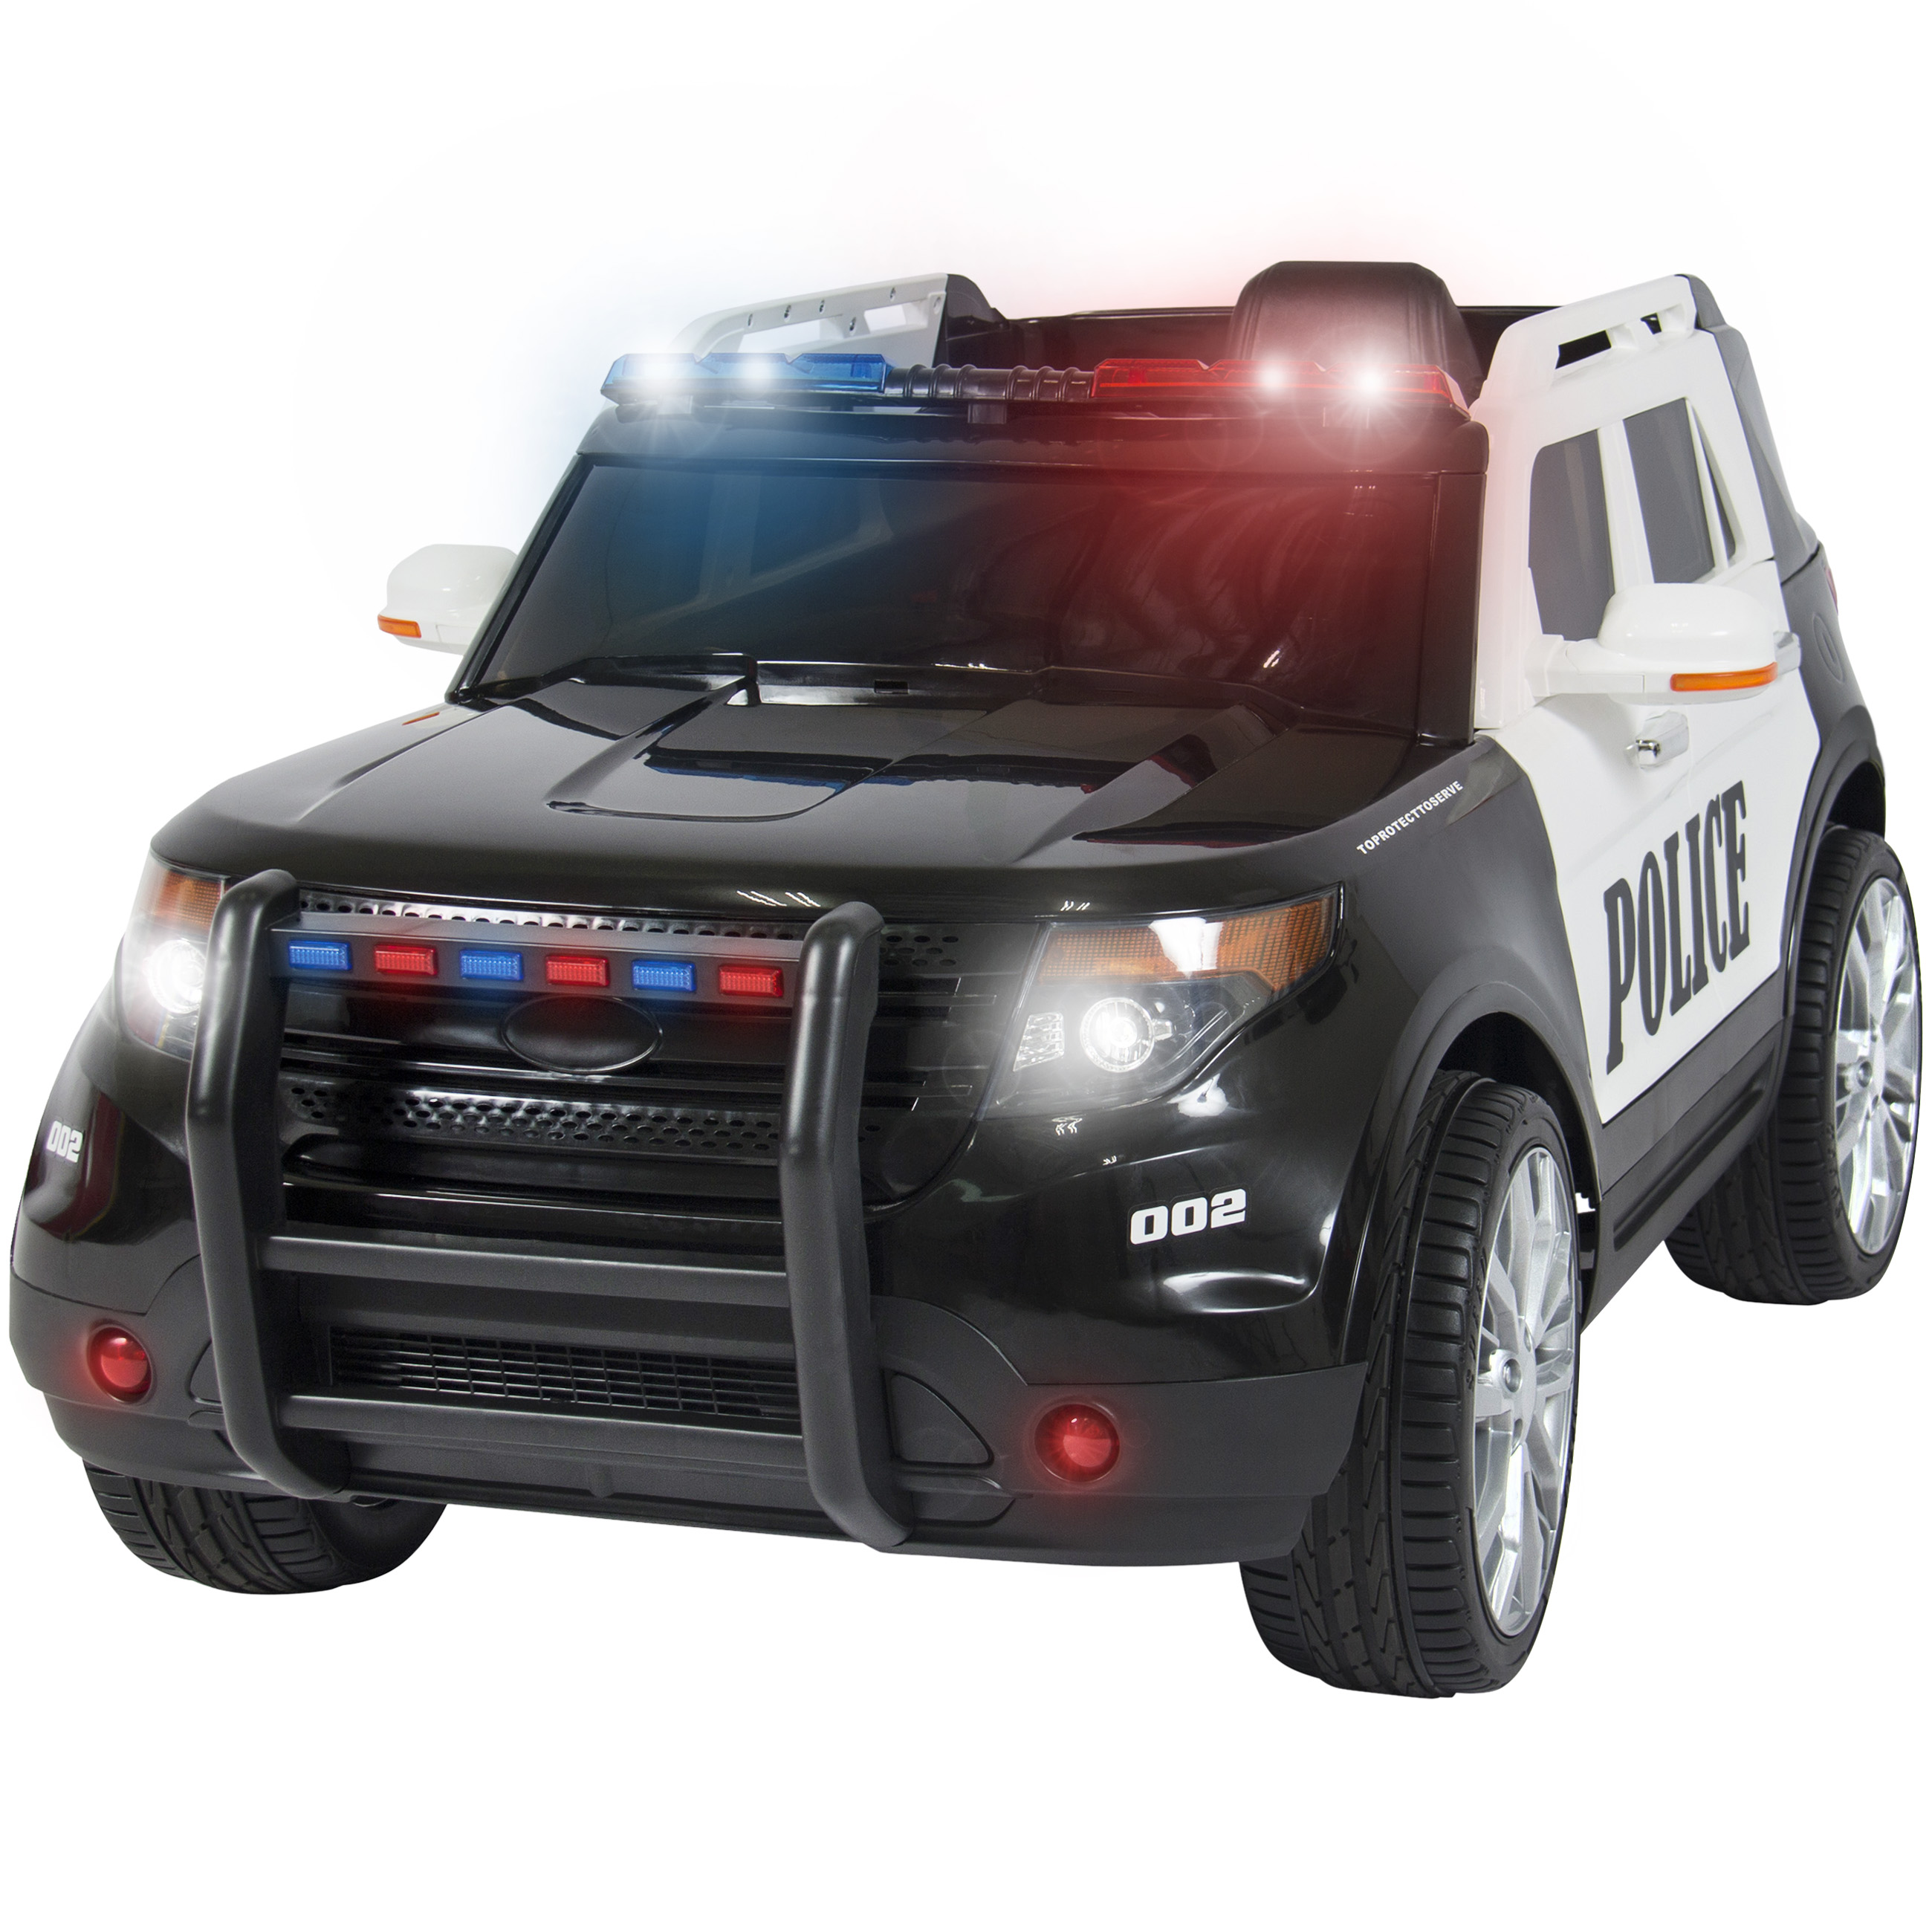 Bcp 12v Kids Police Ride On Suv Car W 2 Speeds Lights Aux Sirens